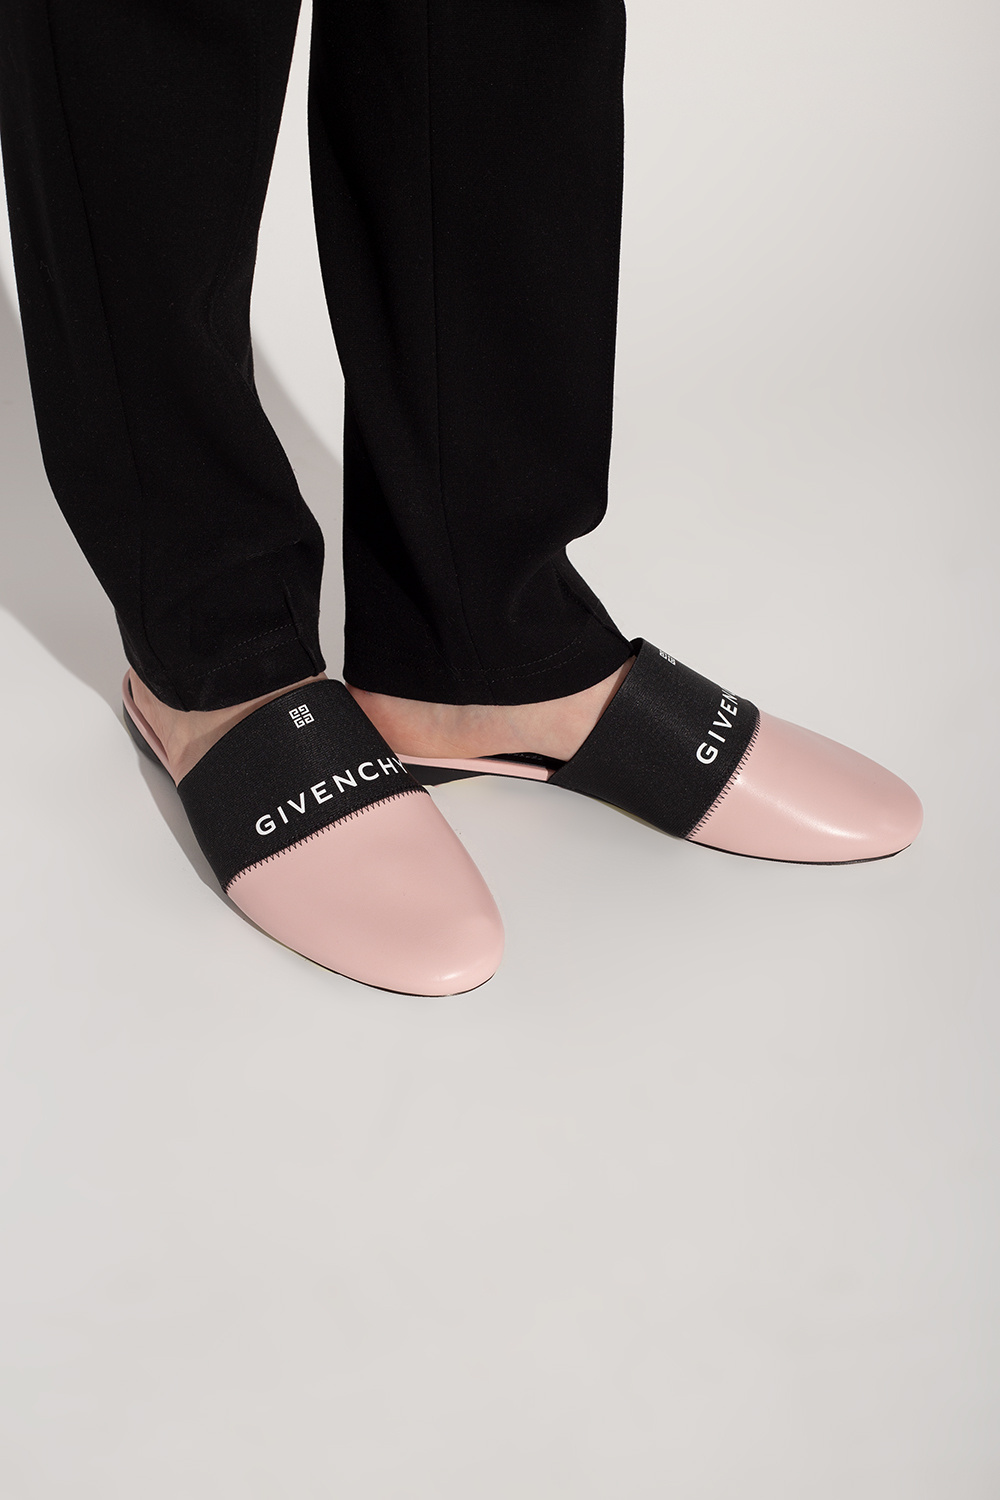 Givenchy 'Bedford' slides | Women's Shoes | Vitkac